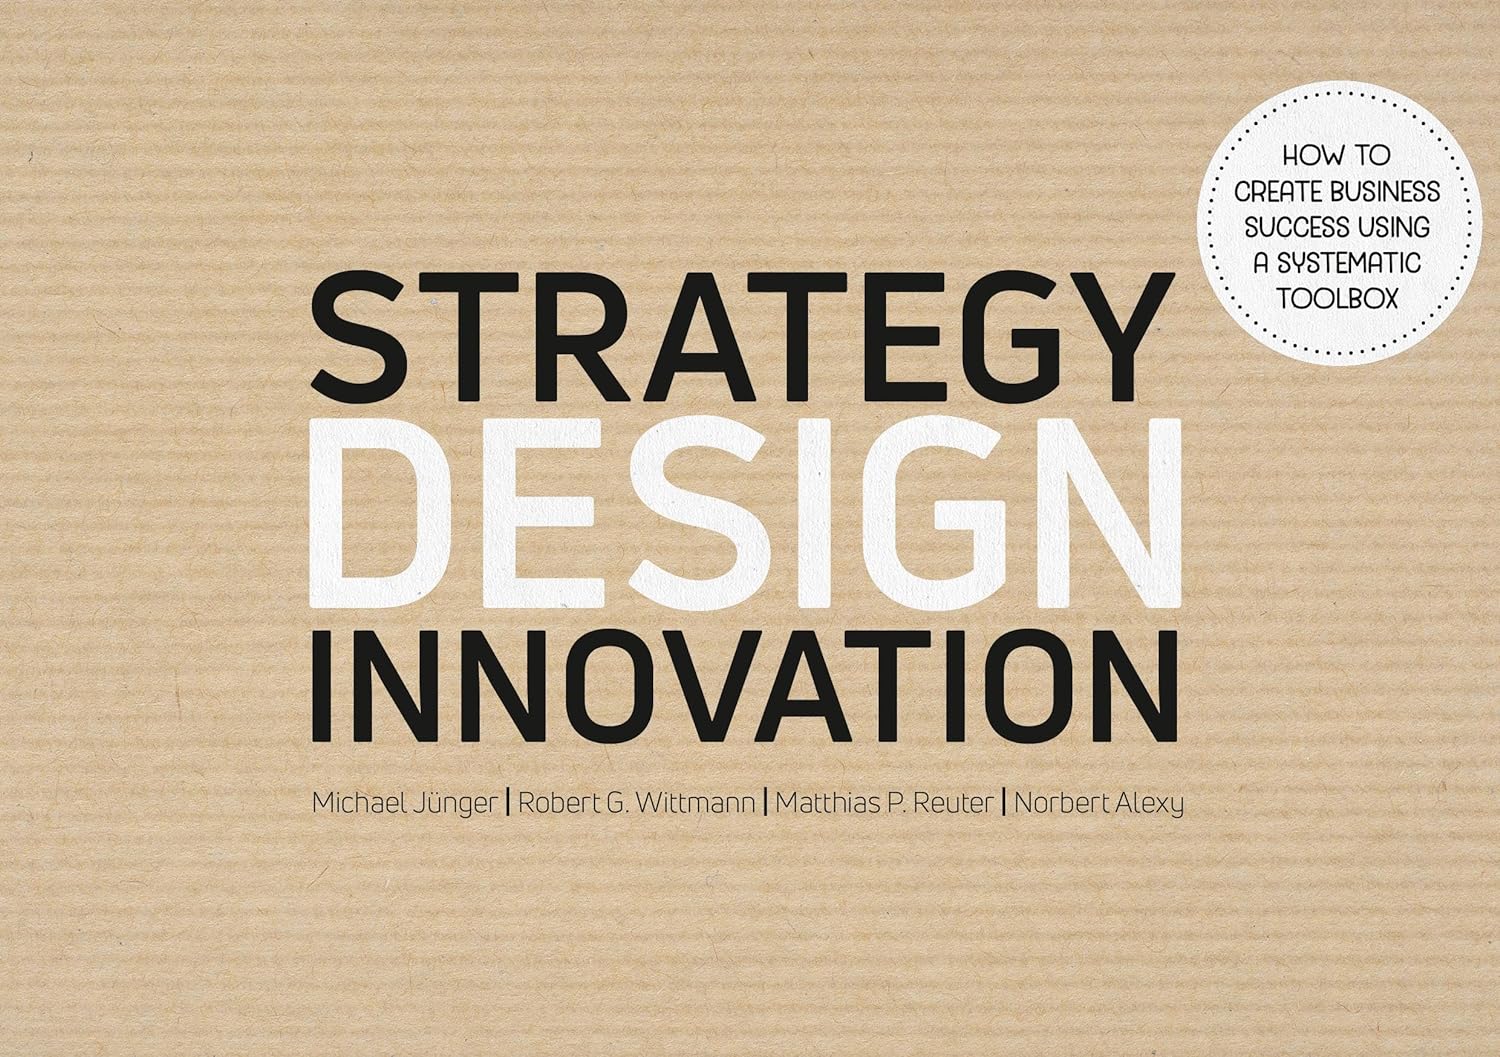 Strategy - Design - Innovation